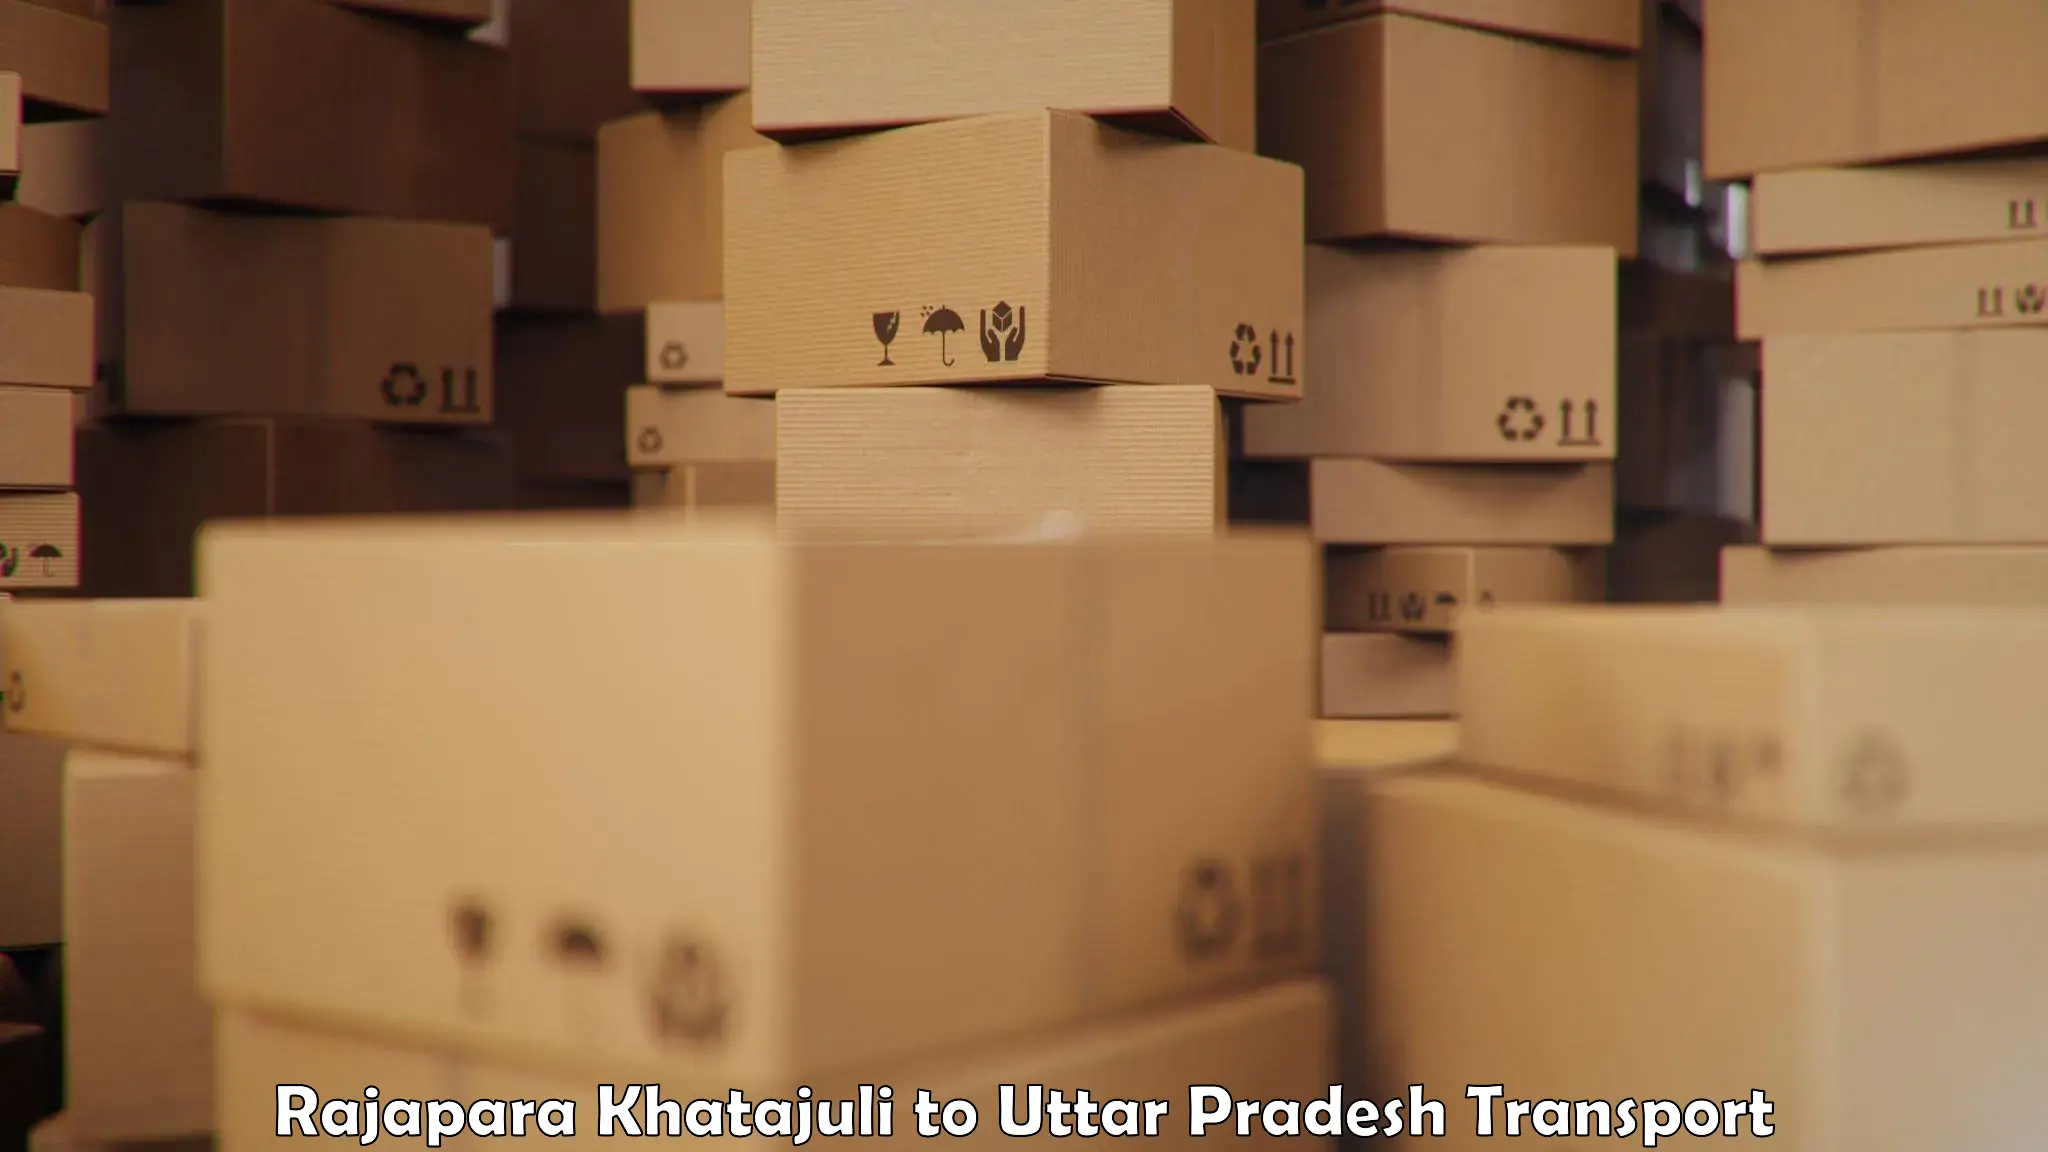 Truck transport companies in India Rajapara Khatajuli to Shohratgarh